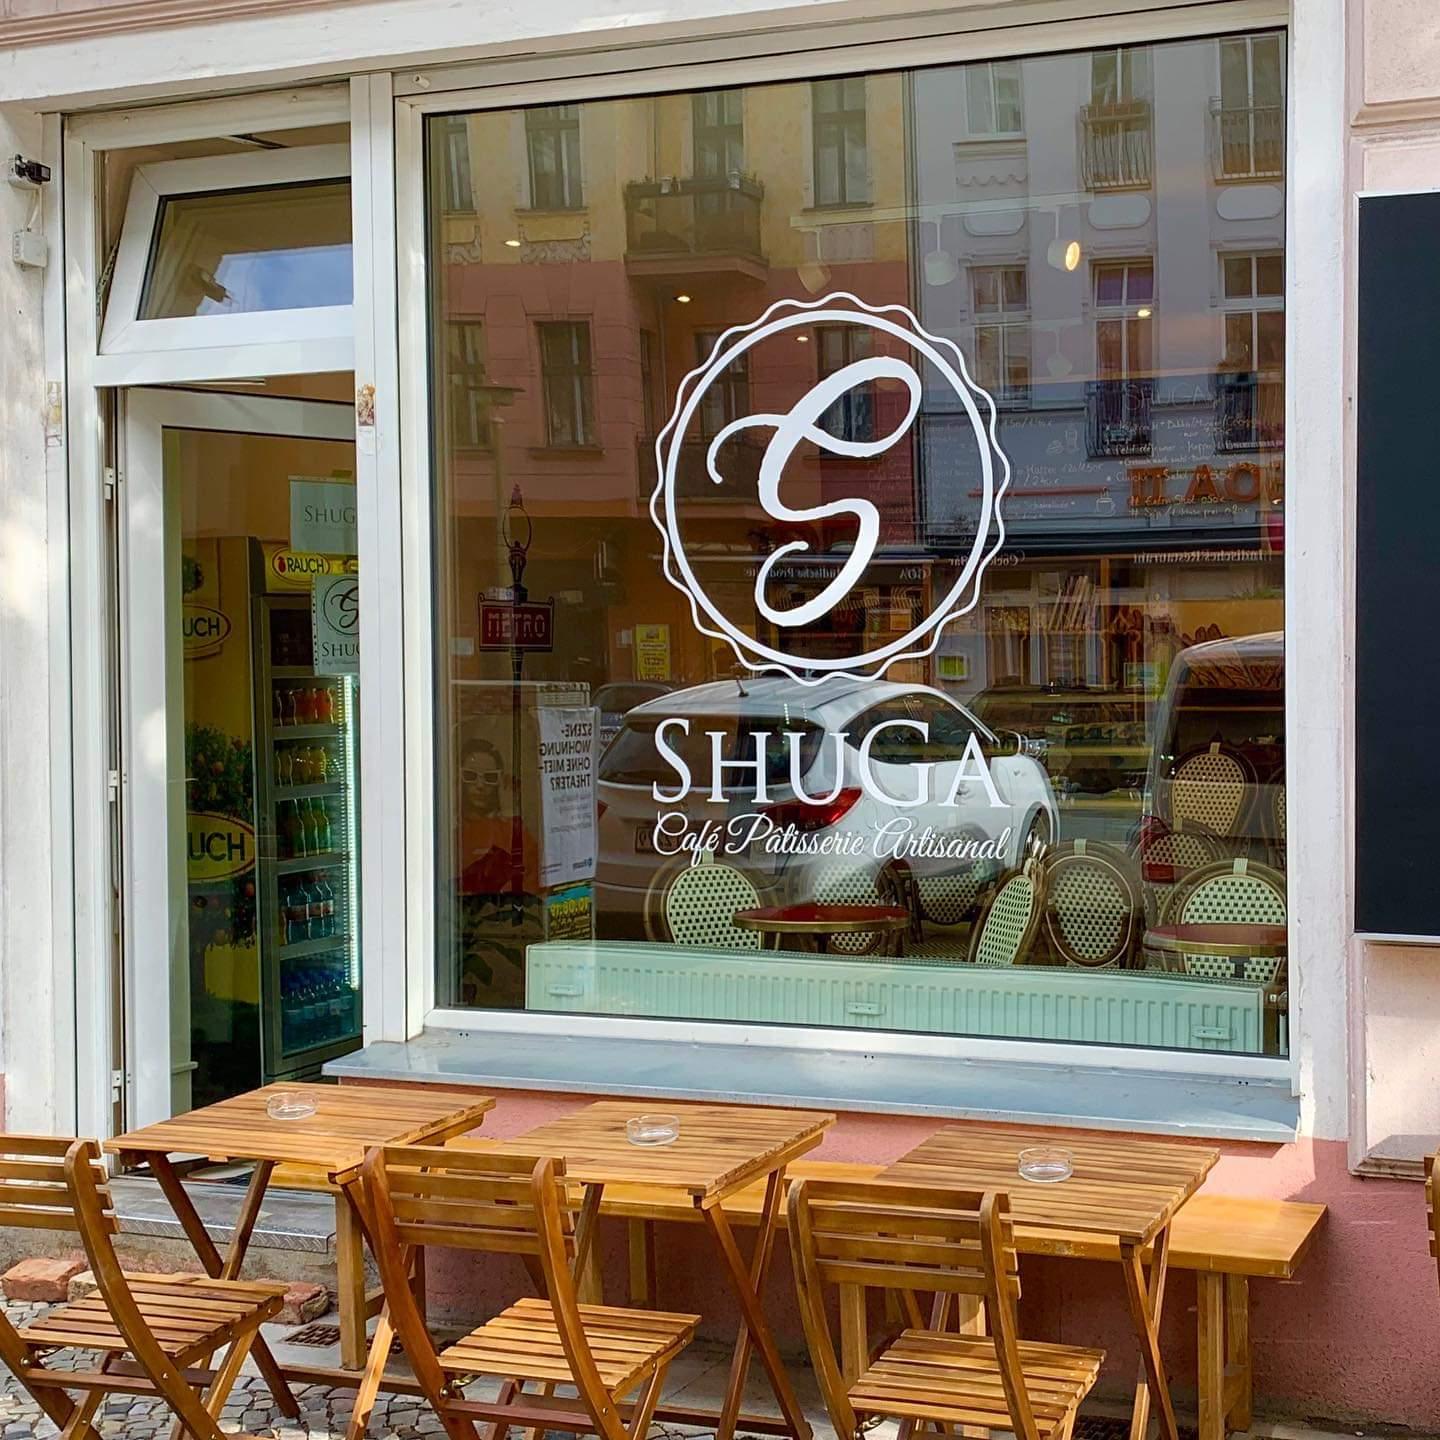 Restaurant "ShuGa - Café Pâtisserie Artisanale" in Berlin